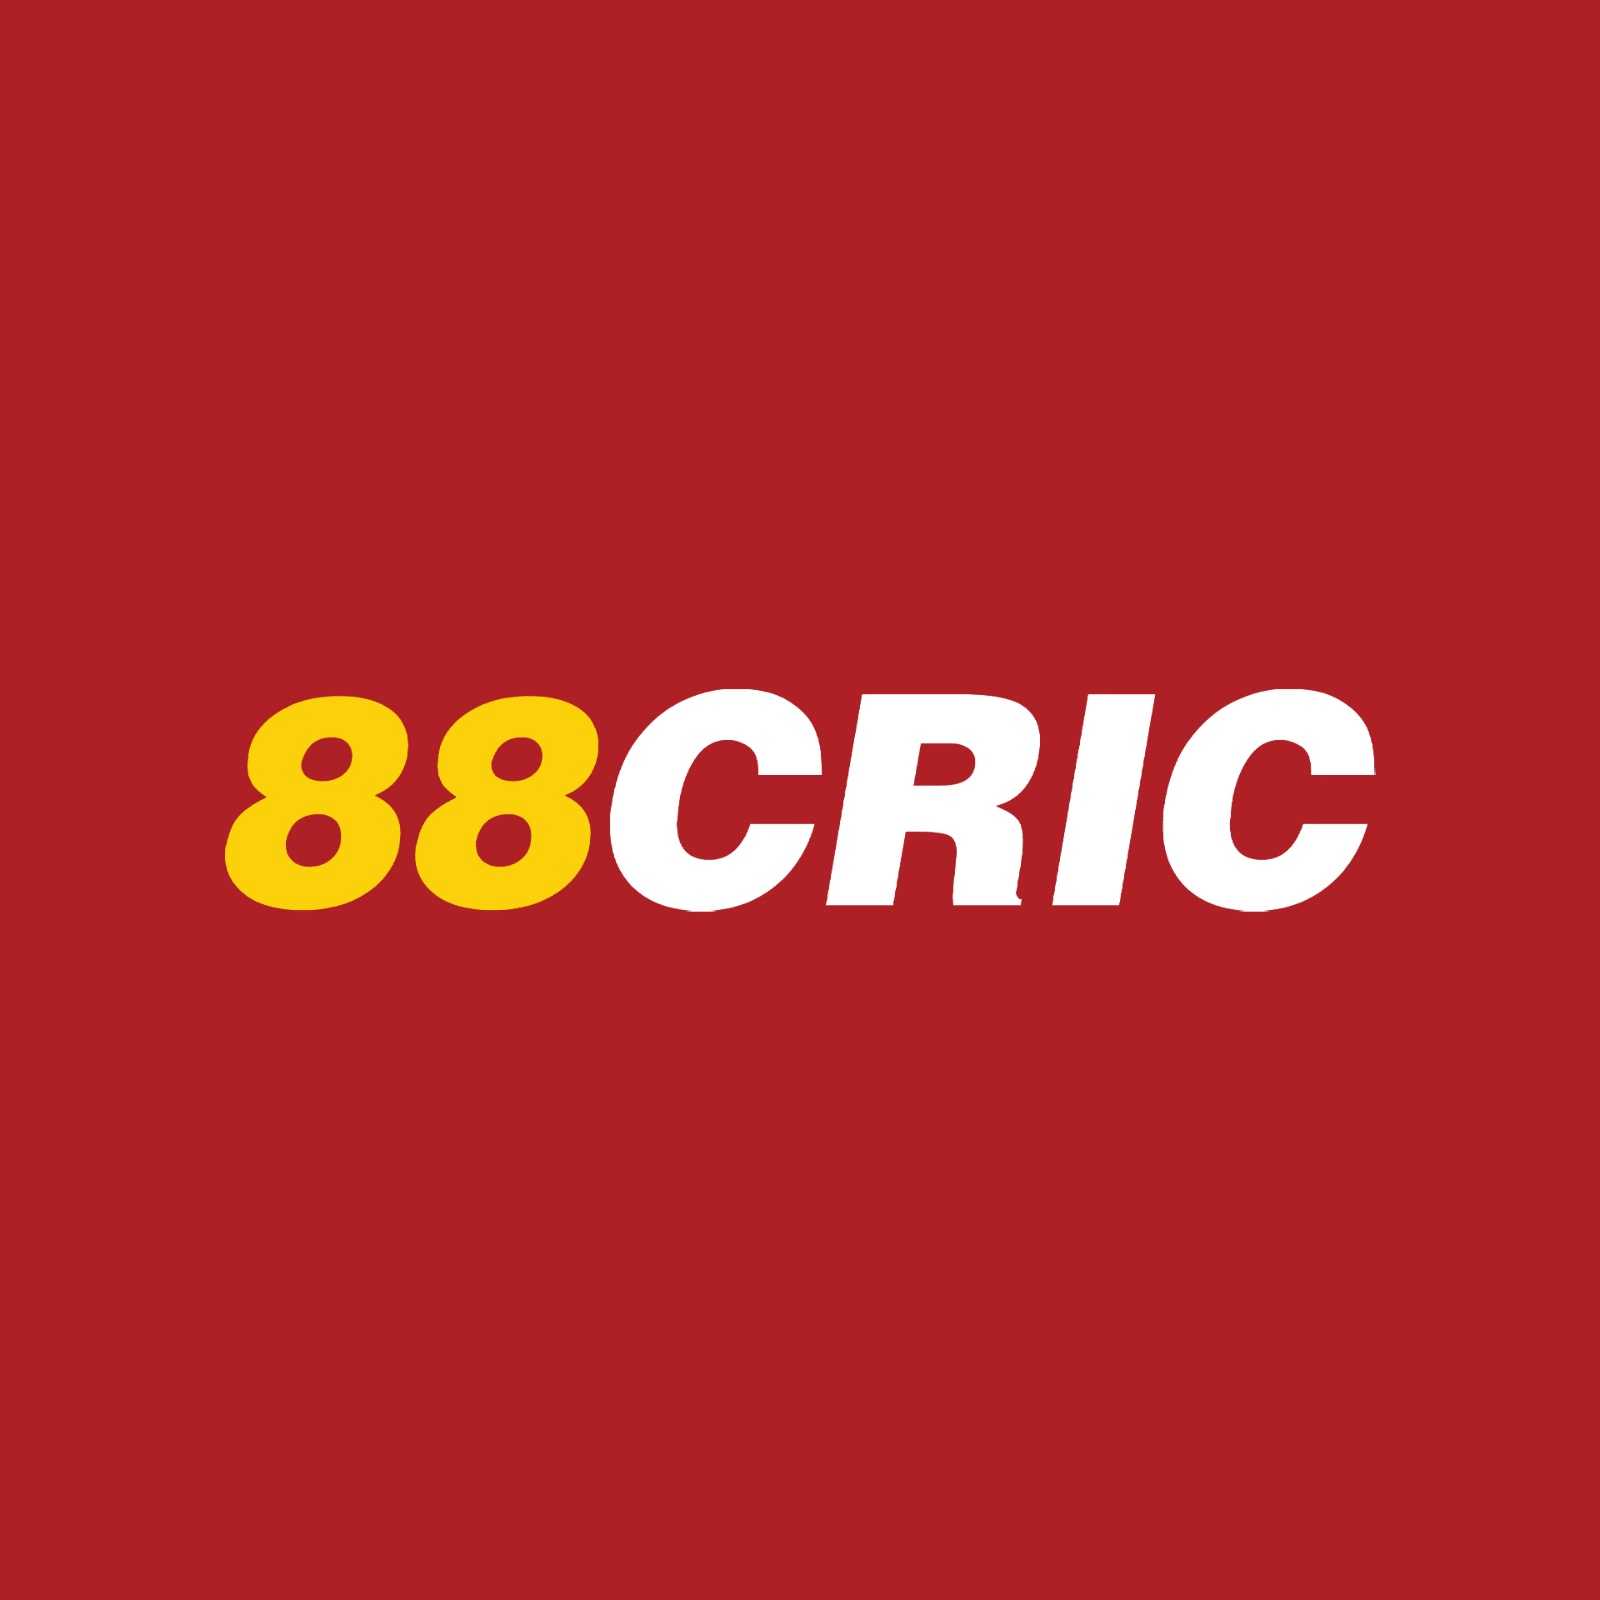 88cric cric